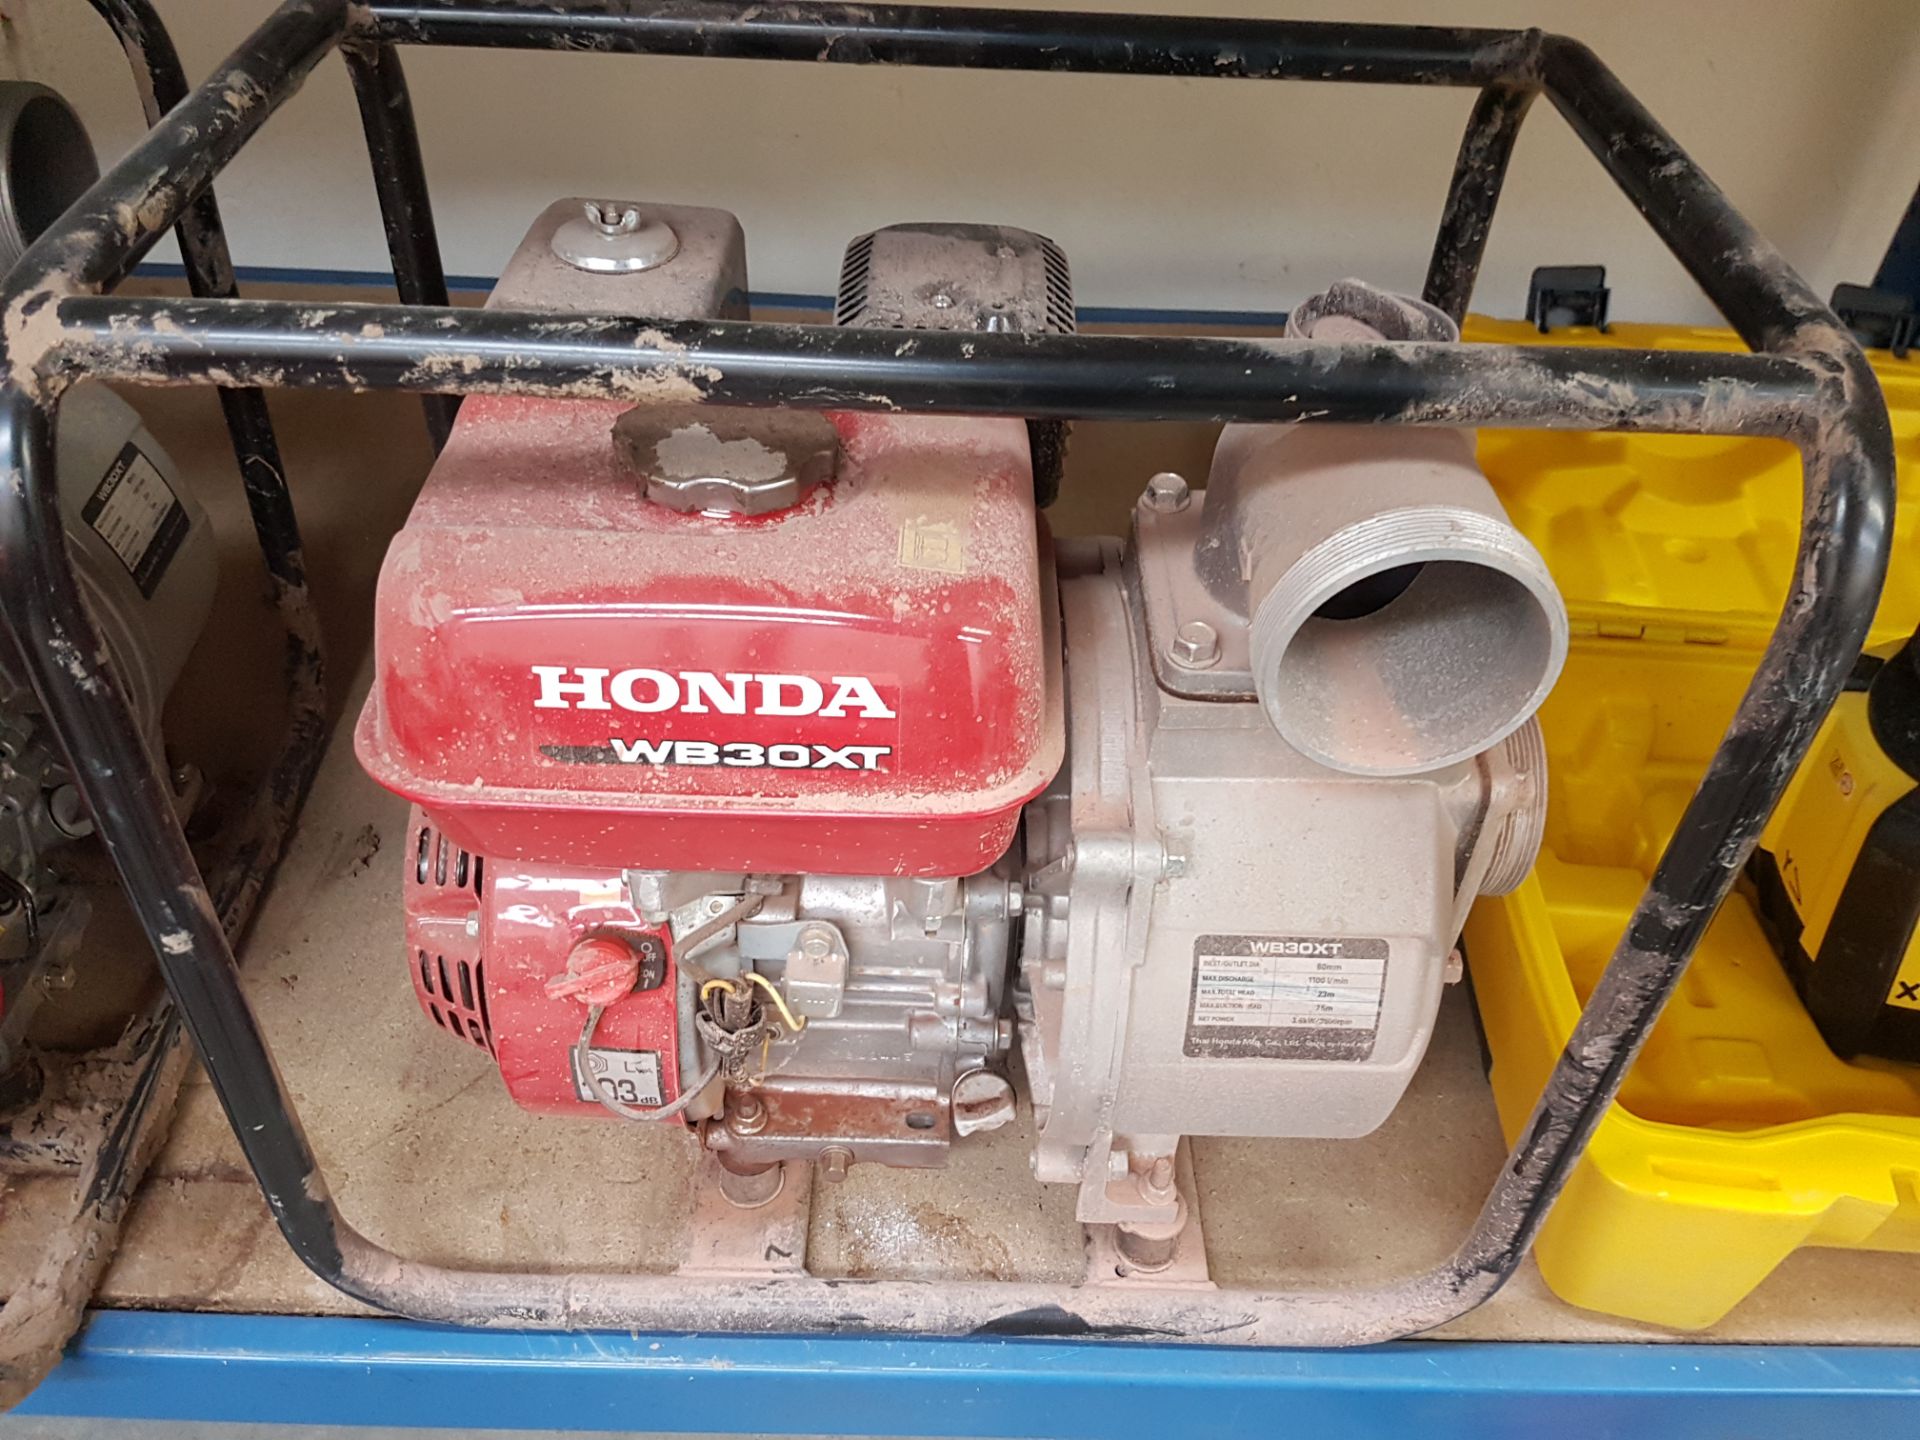 1 x Honda WB30XT Centrifugal 3 inch Water Pump - CL303 - Location: Altrincham WA14 - Image 5 of 6